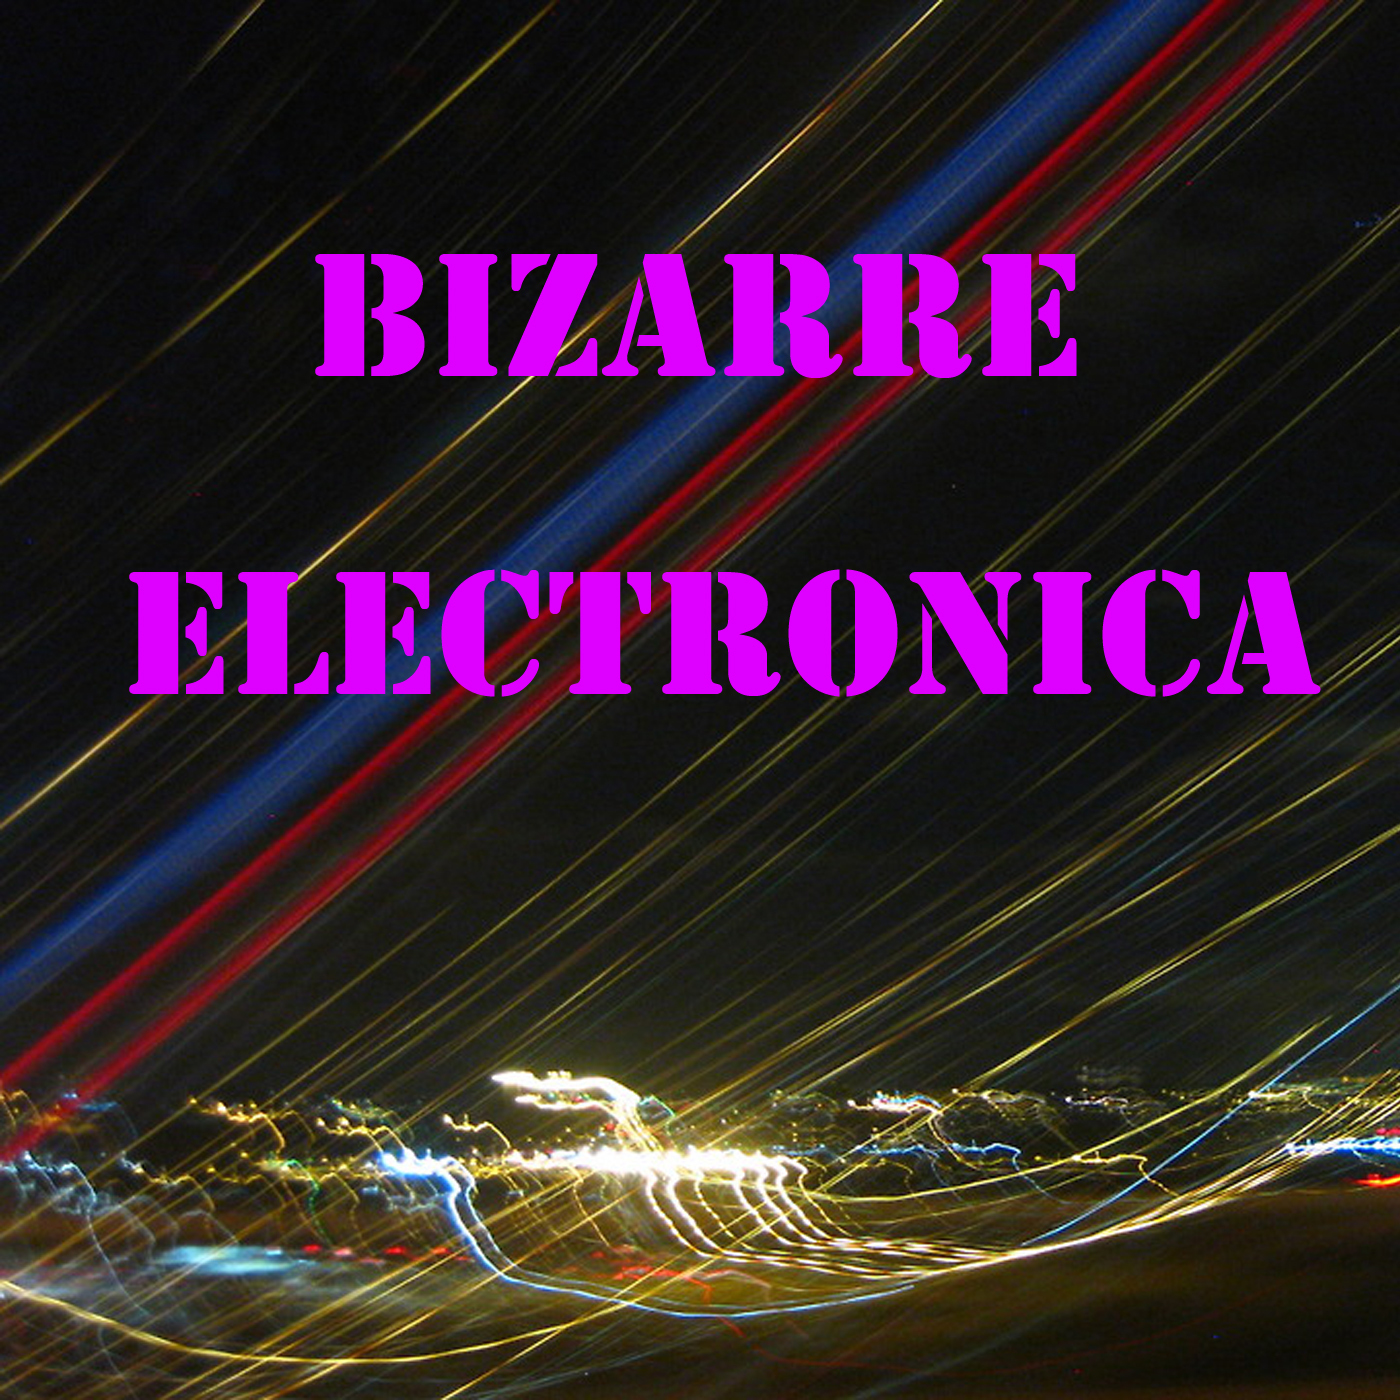 Bizarre Electronica